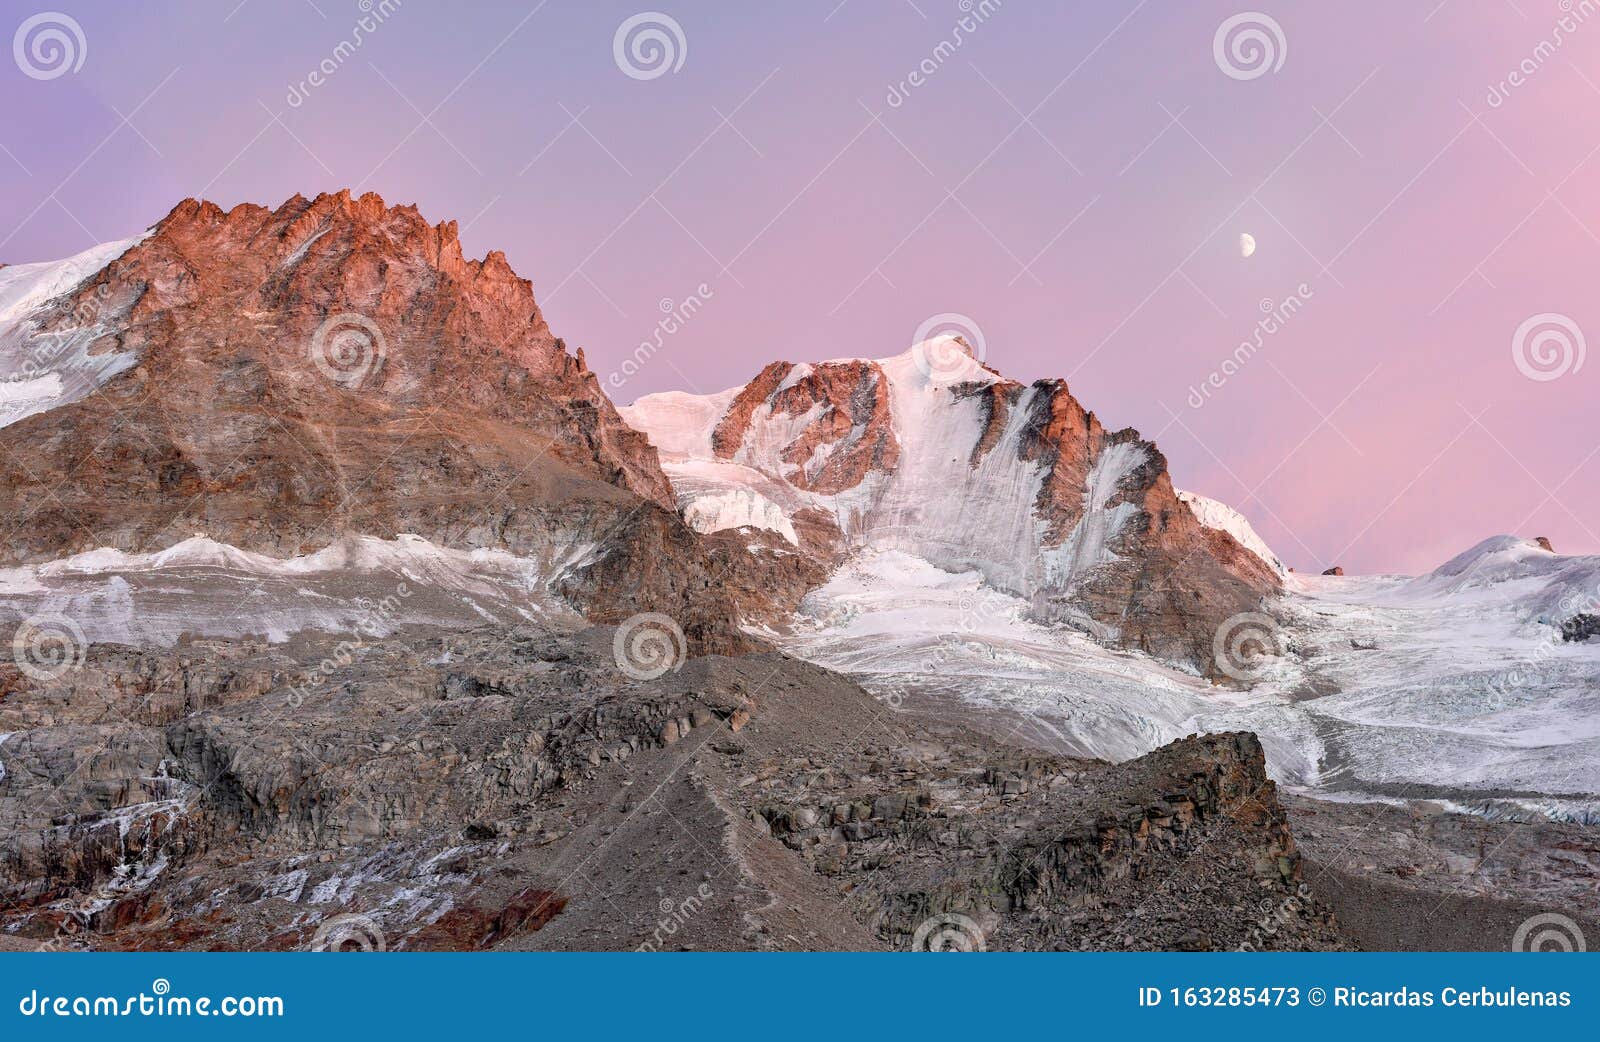 Amazing Gran Paradiso Mountain Stock Image - Image of snow, himalaya:  163285473